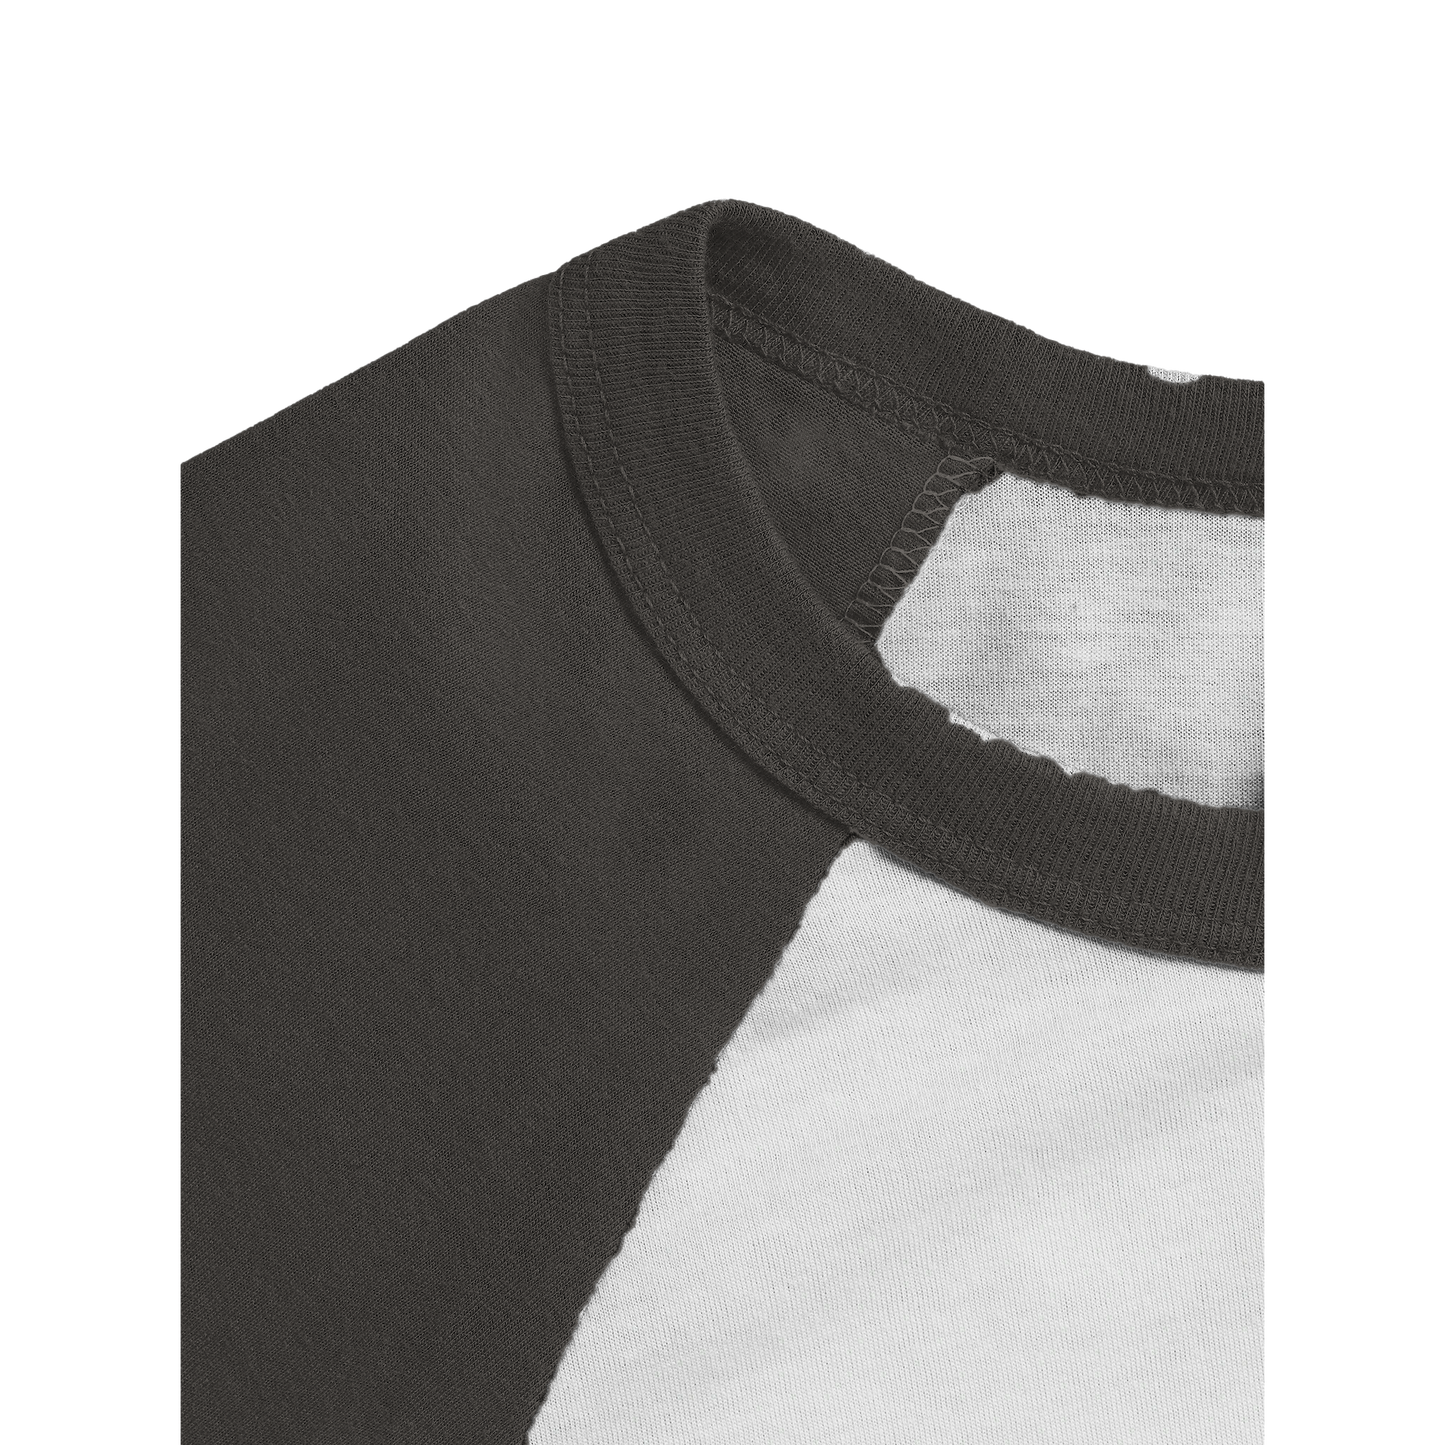 Better Days Ahead | Unisex 3/4 sleeve Raglan T-shirt